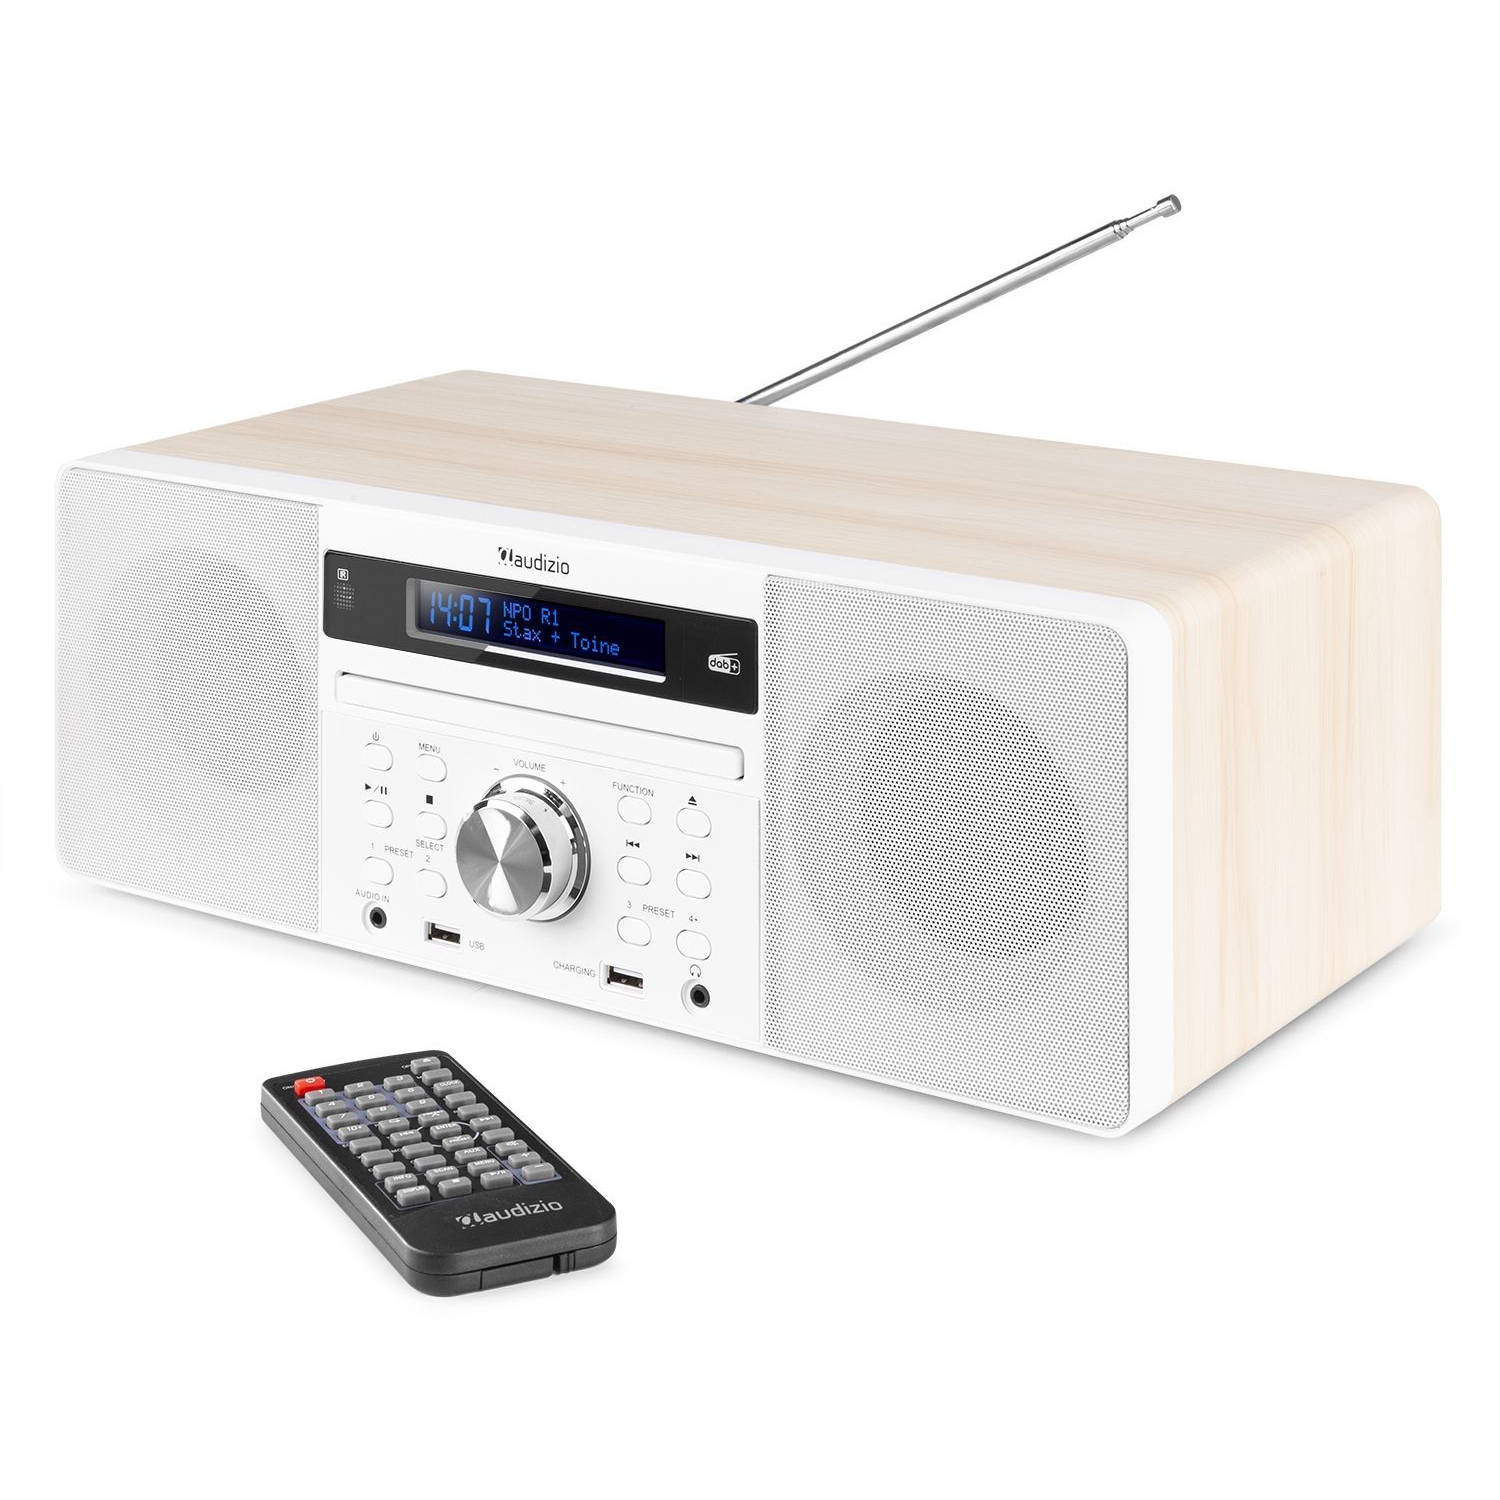 Downtown straf Voorkomen DAB radio met CD speler, Bluetooth, USB mp3 speler en radio - Stereo - Wit  - Audizio Prato | Blokker